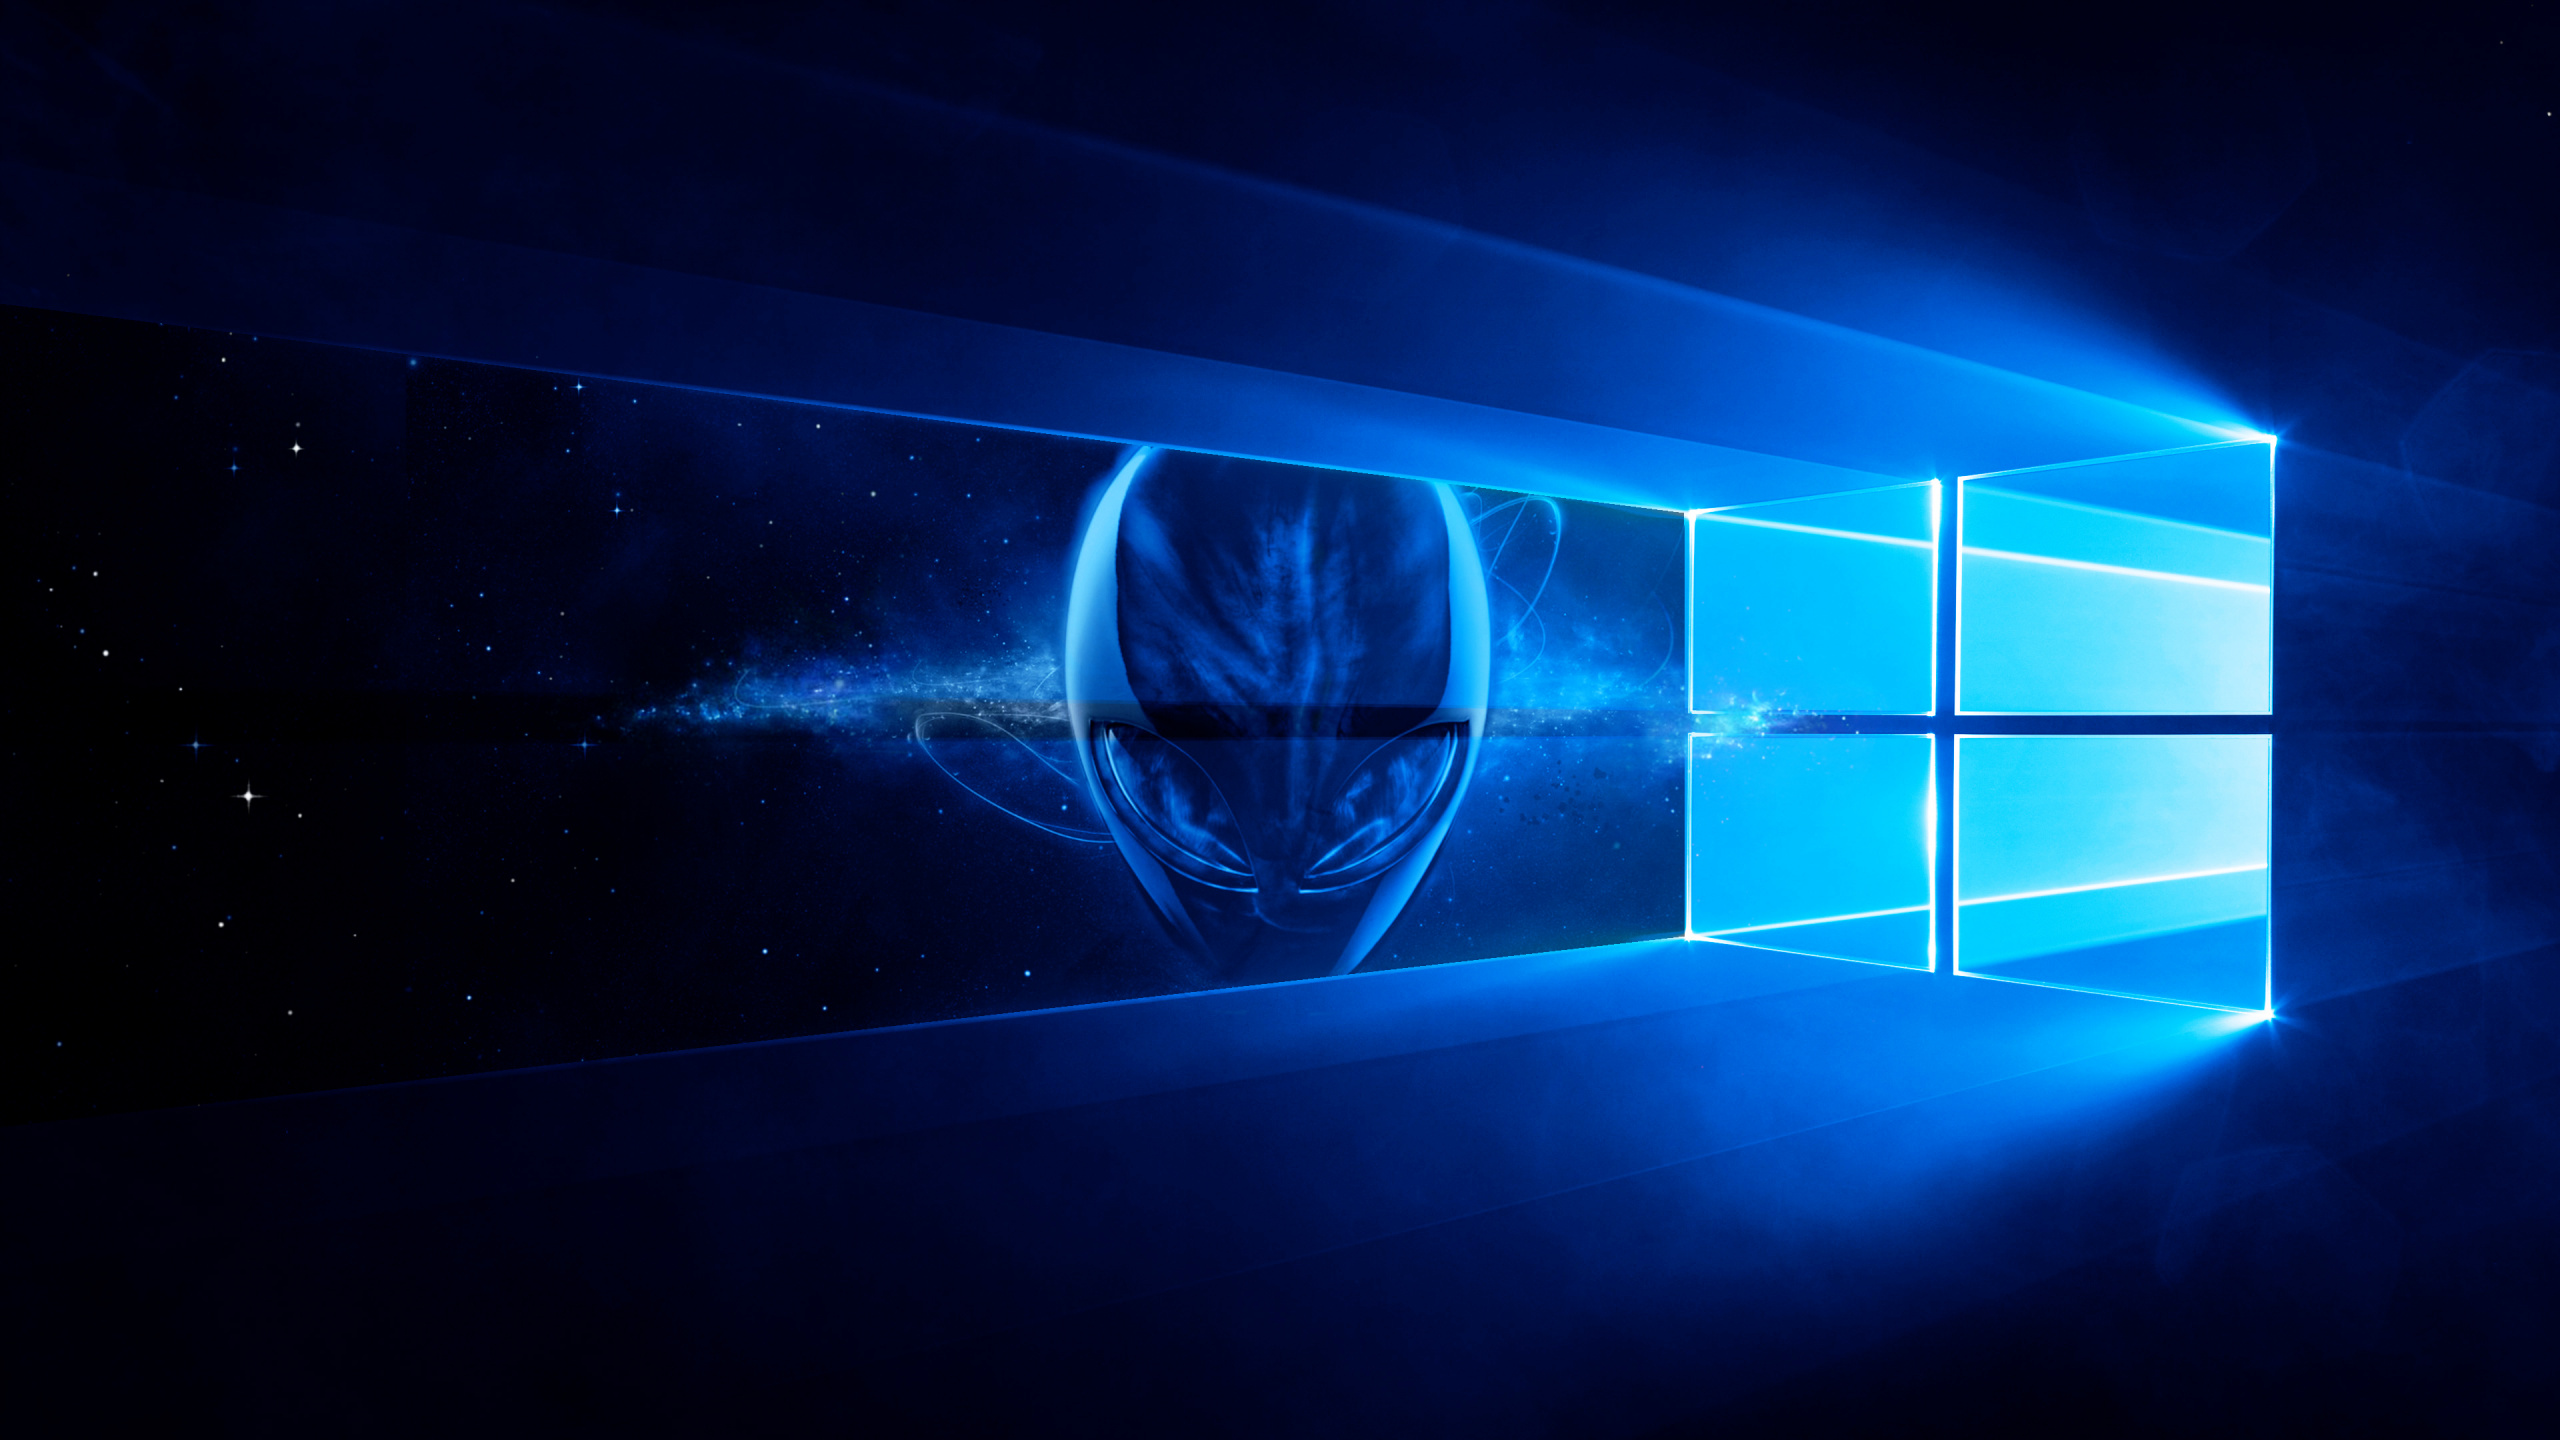 Alienware, Blau, Licht, Electric Blue, Technologie. Wallpaper in 2560x1440 Resolution